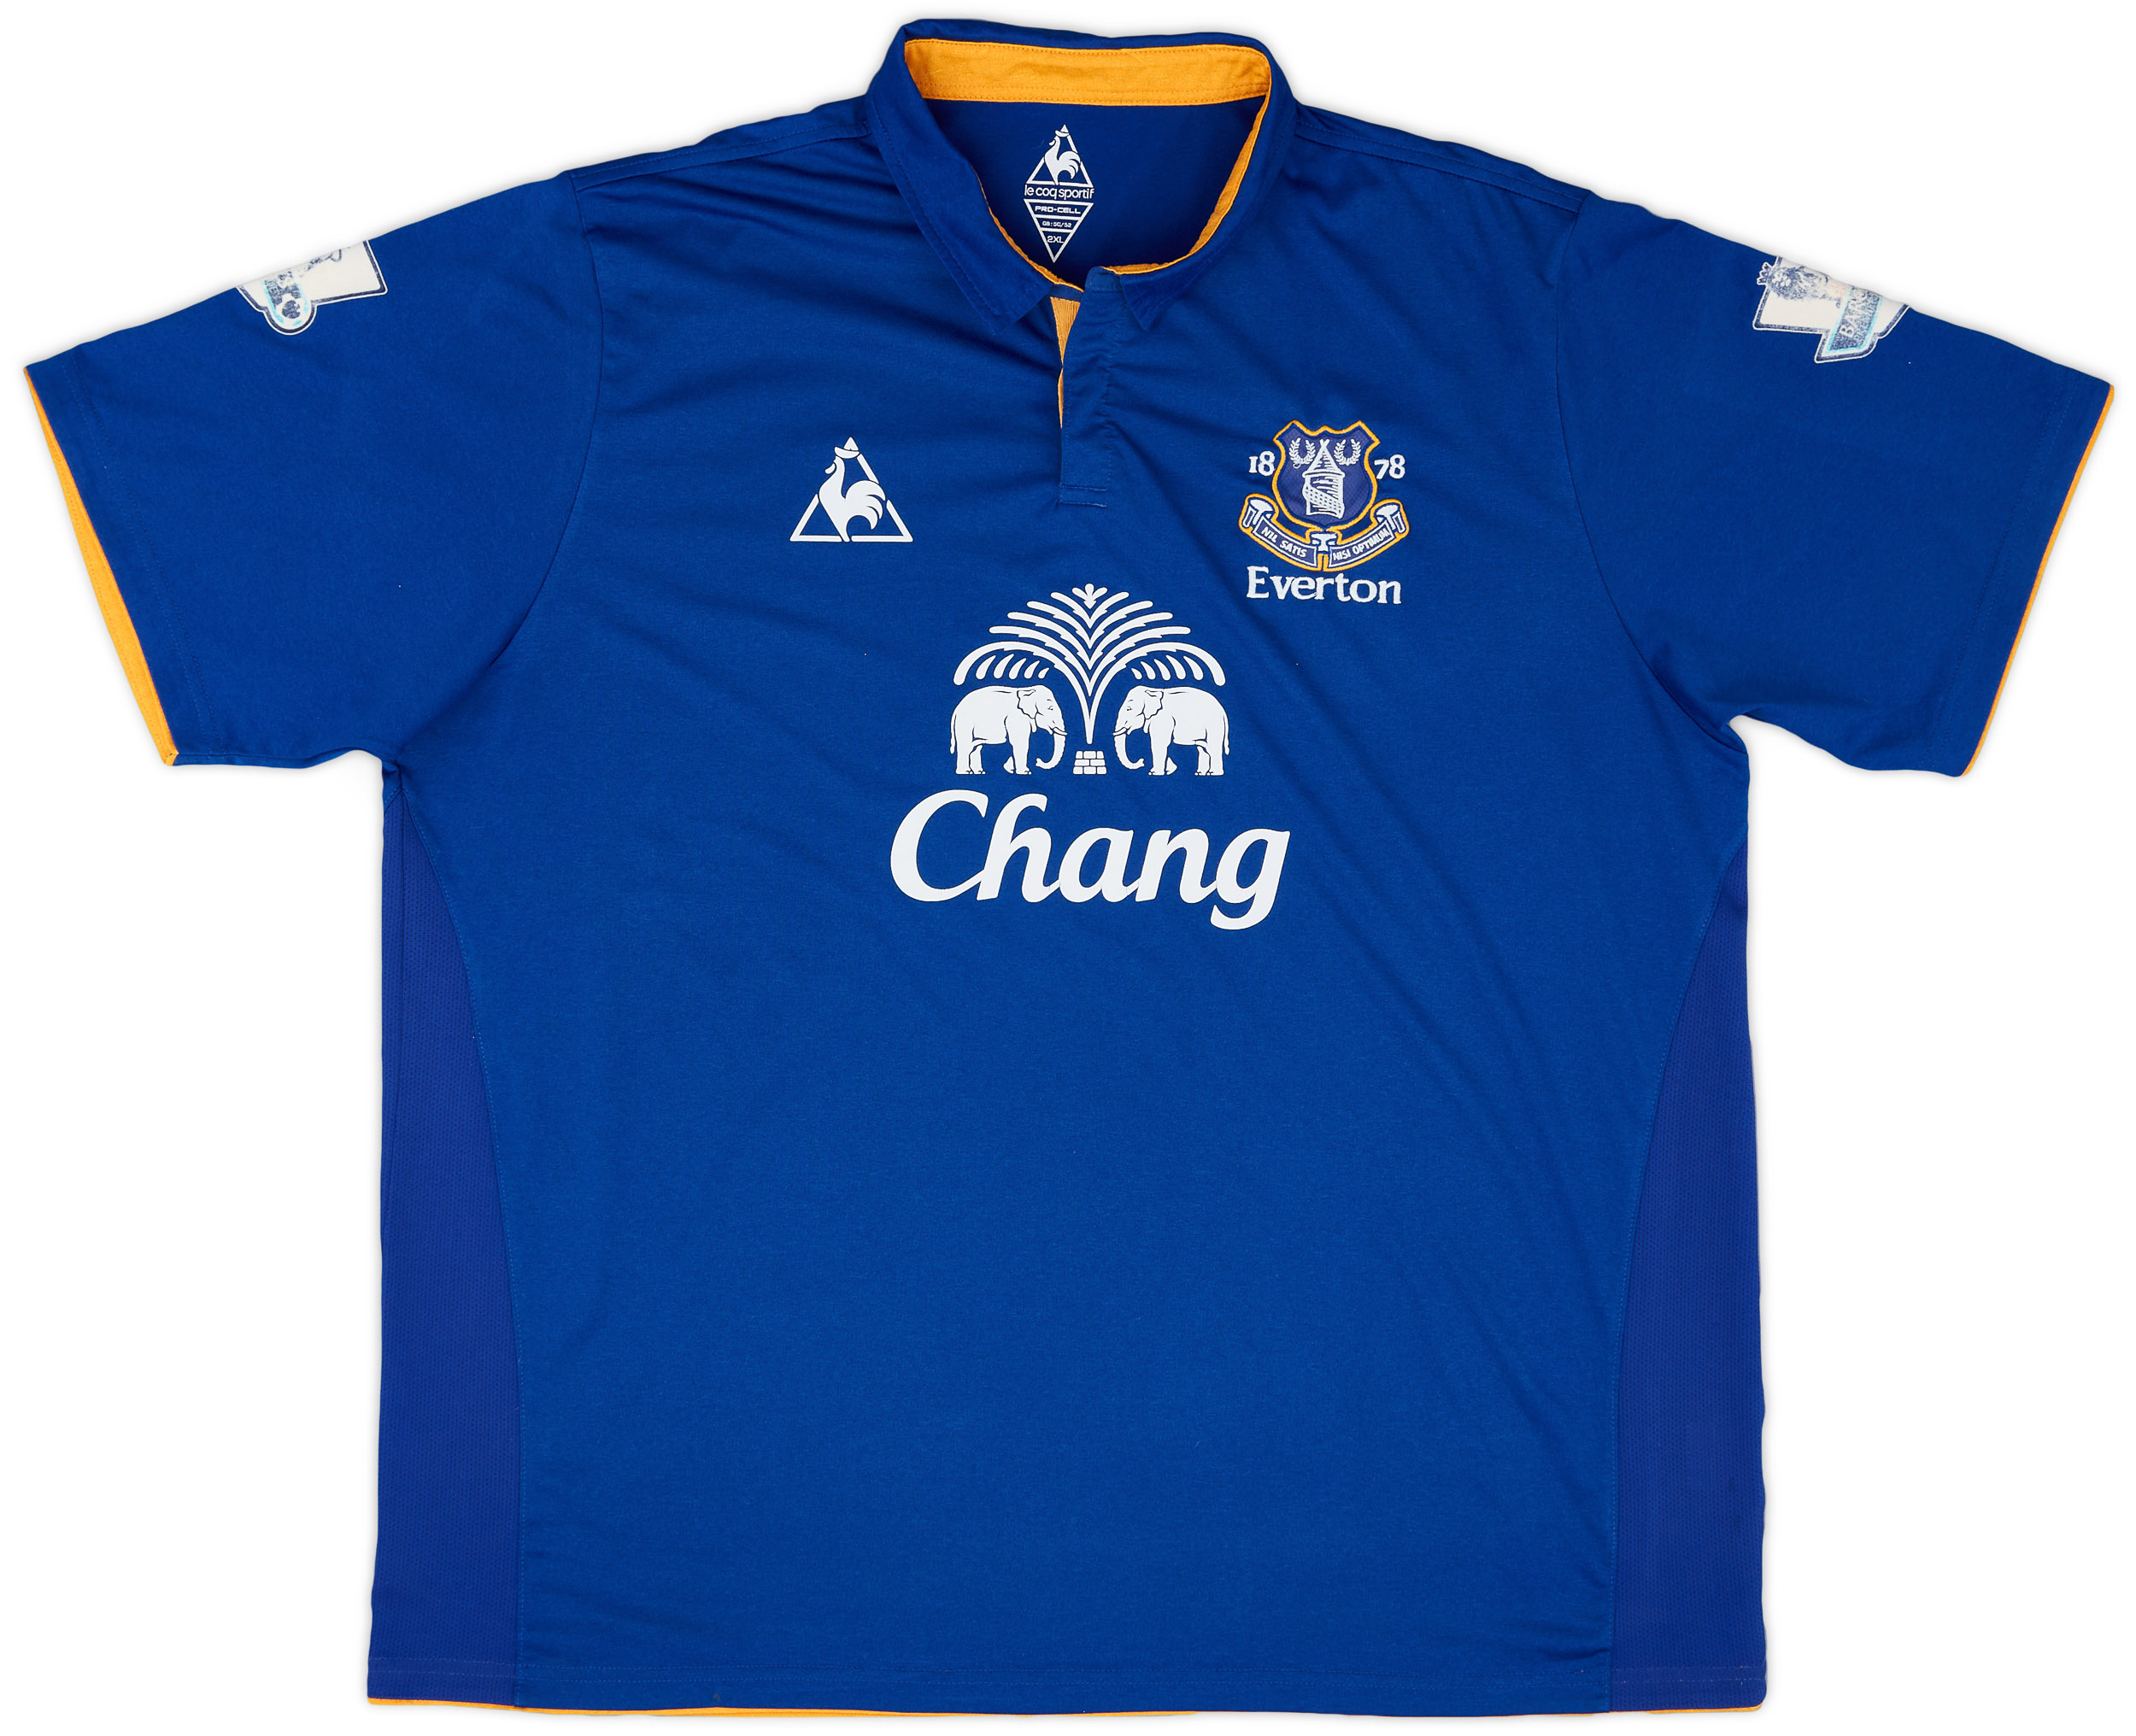 2011-12 Everton Home Shirt - 6/10 - ()